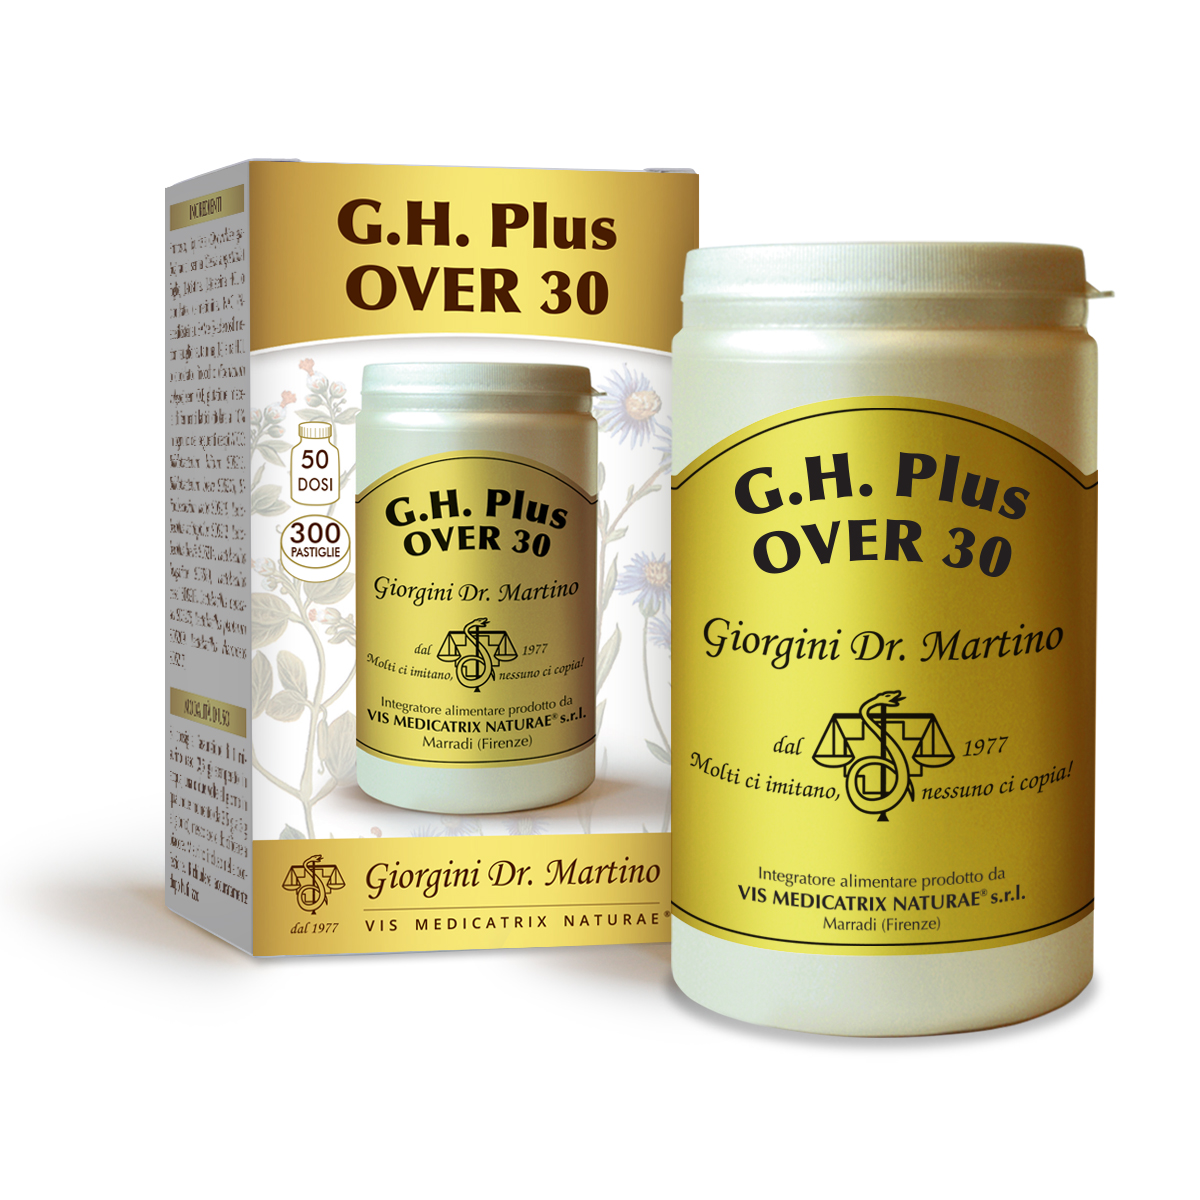 G.H. Plus OVER 30 - 150g - 300pastiglie da 500 mg